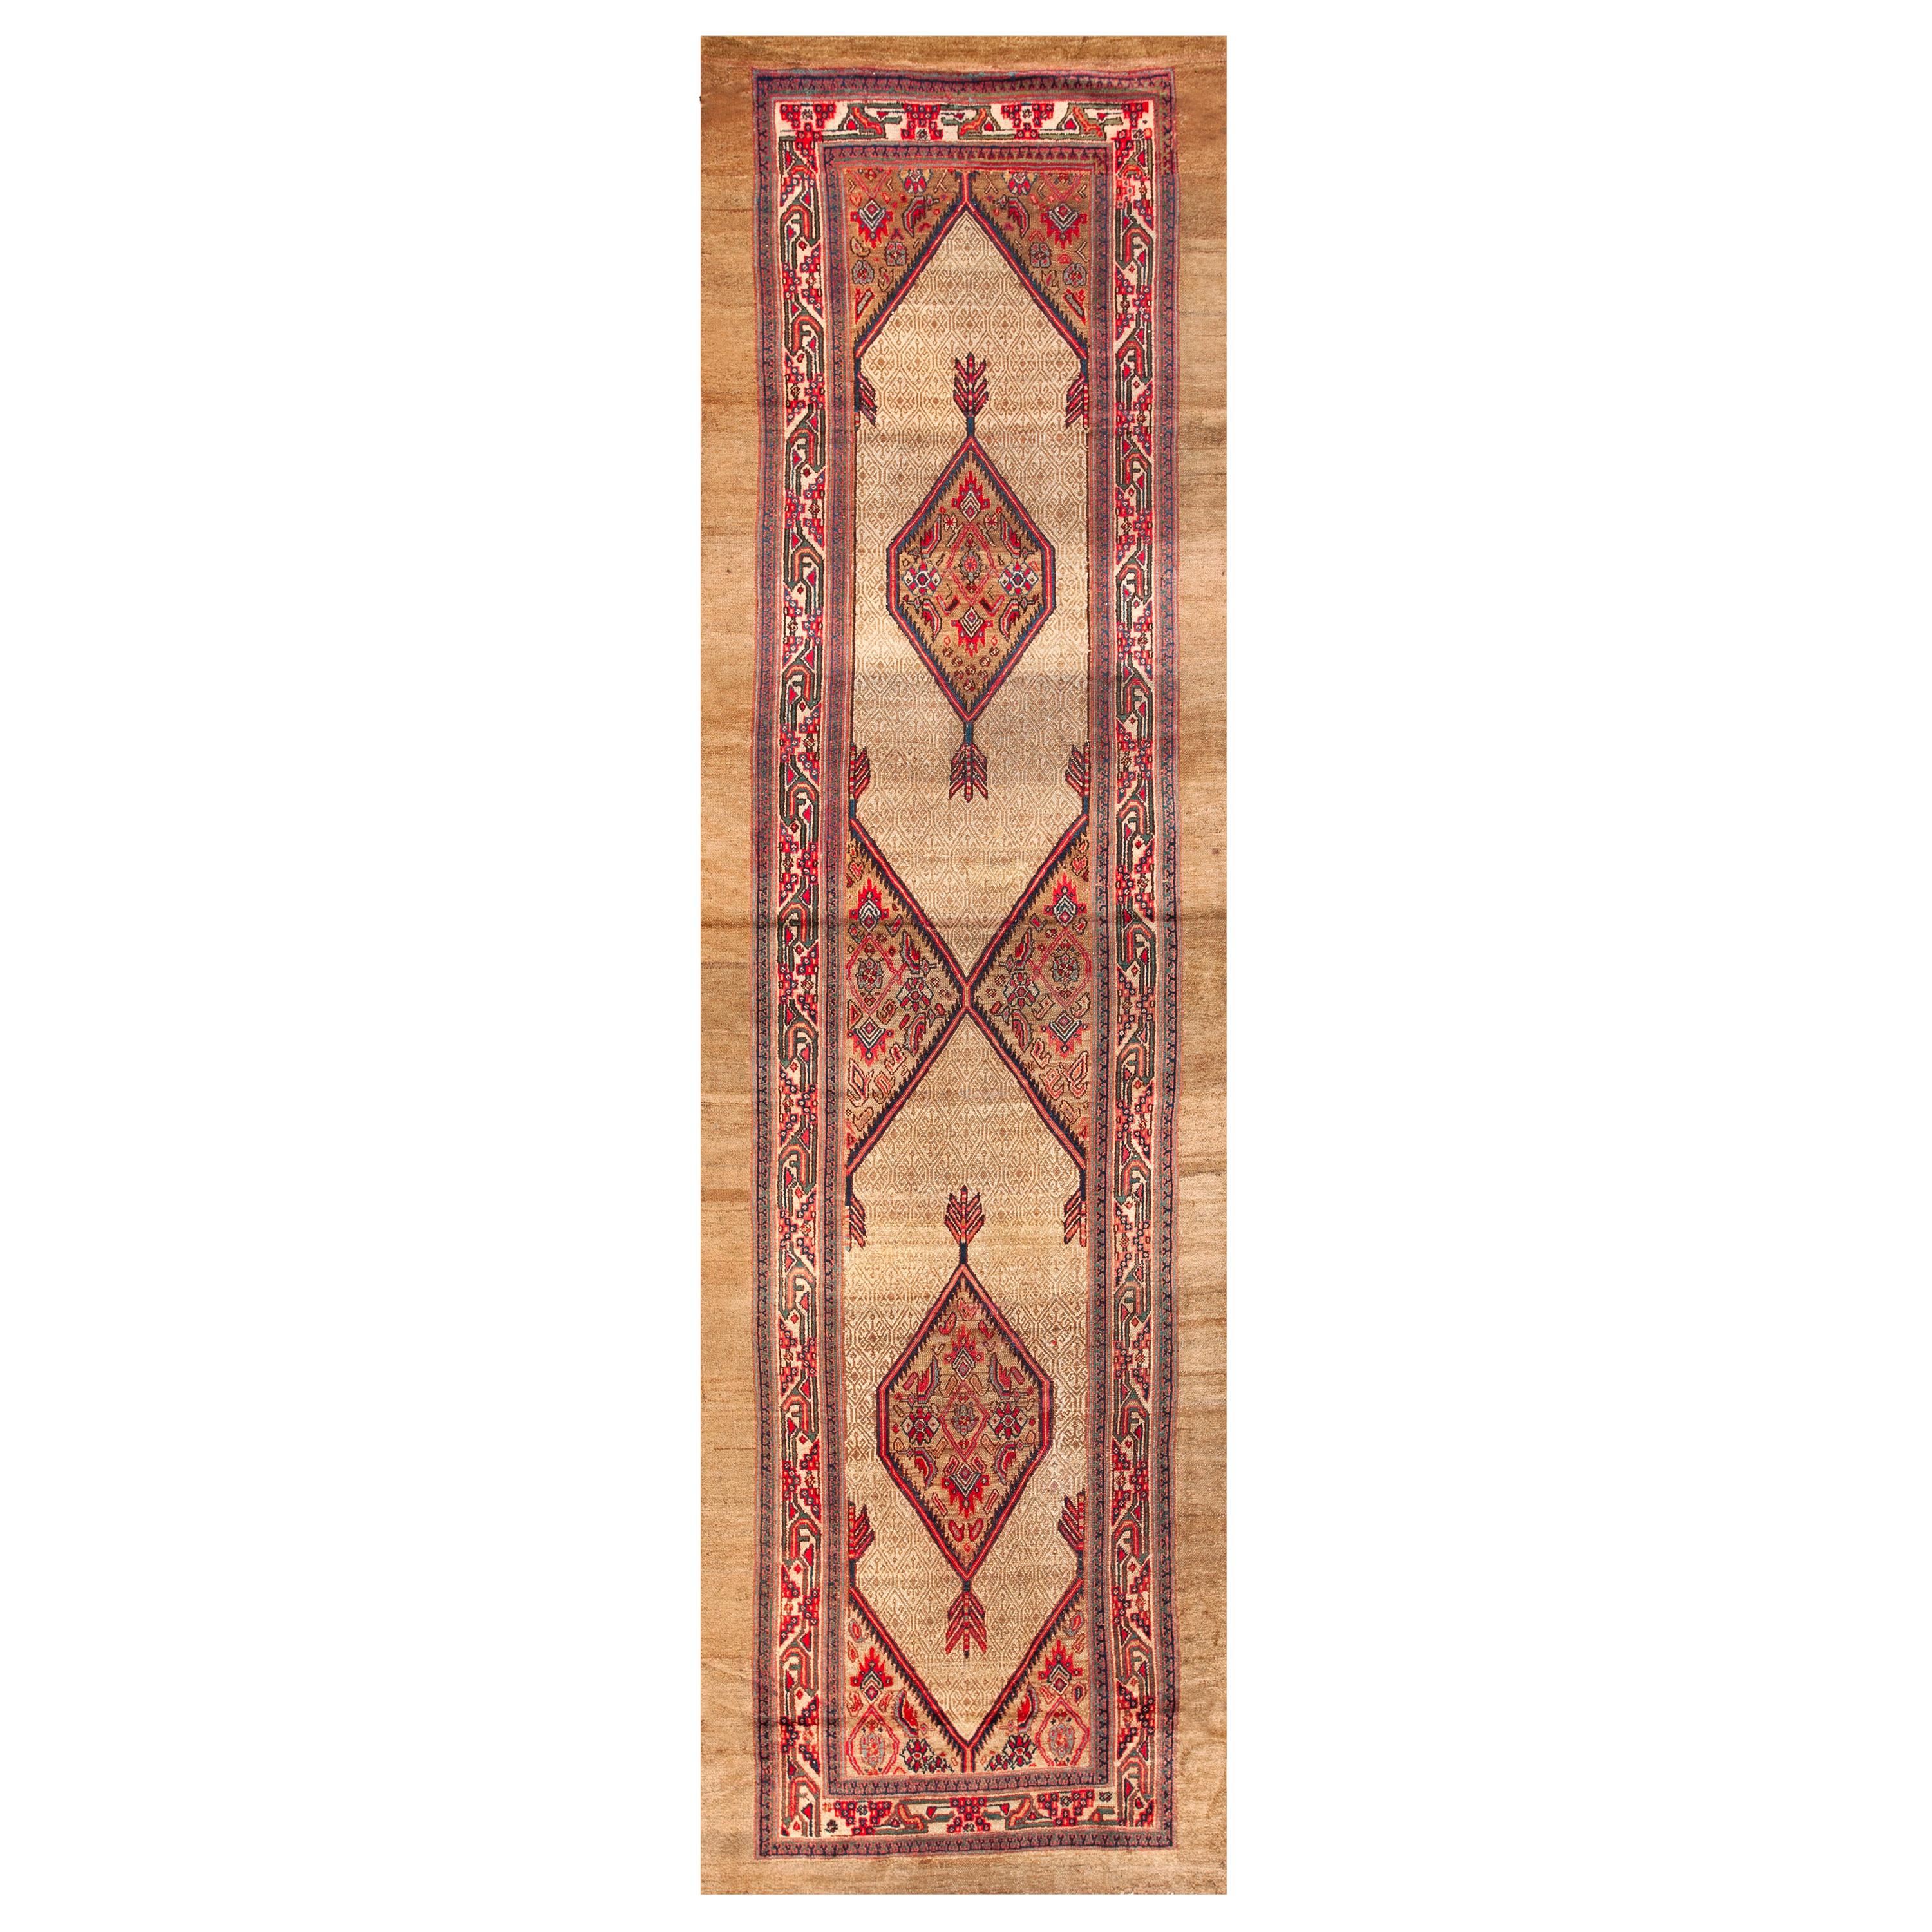 Early 20th Century Persian Camel Hair Serab Carpet ( 3'6" x 12'3" - 107 x 373 )